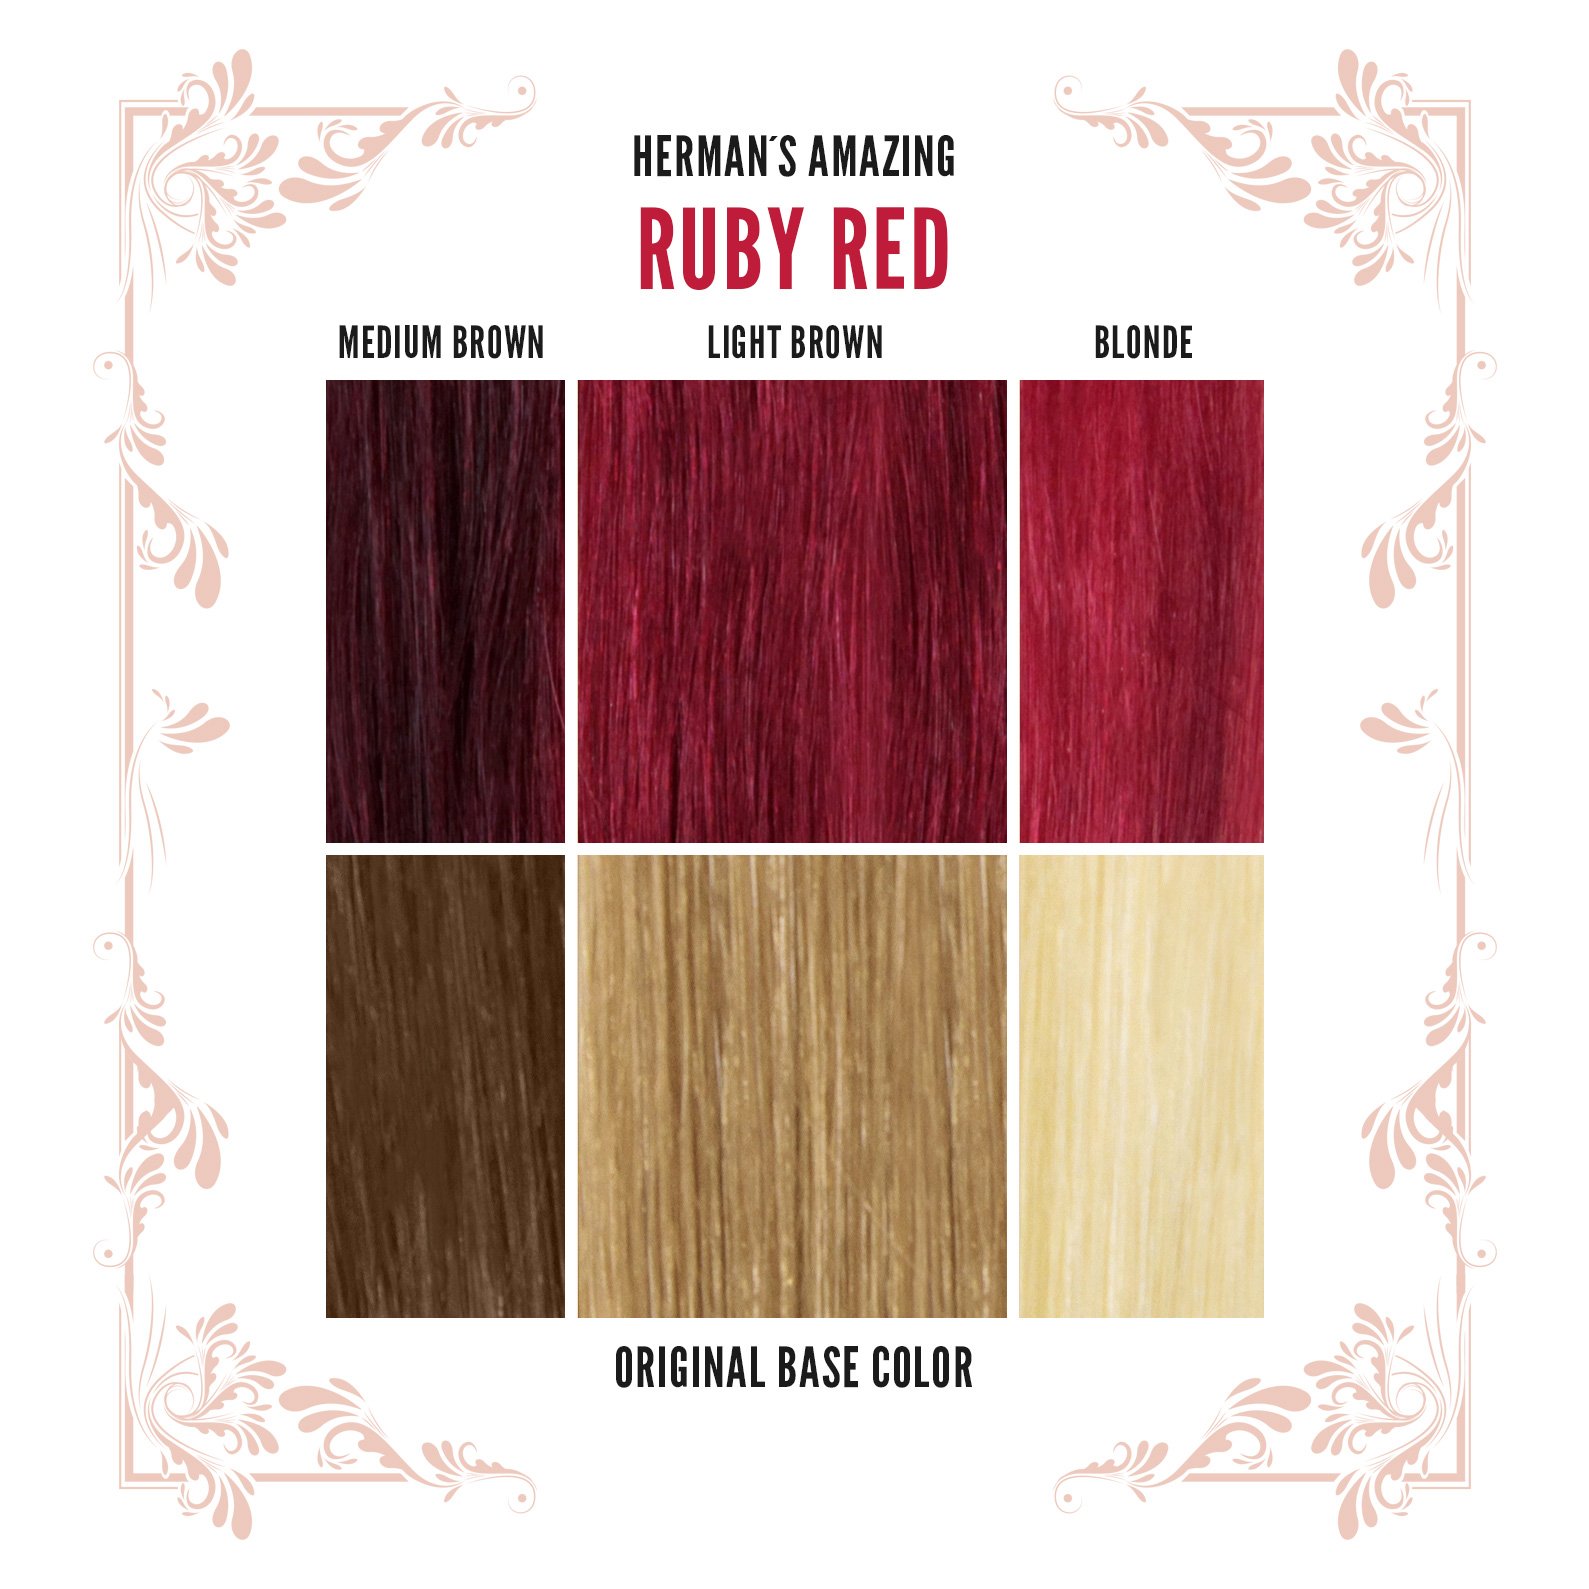 Herman 's Amazing - Ruby Red